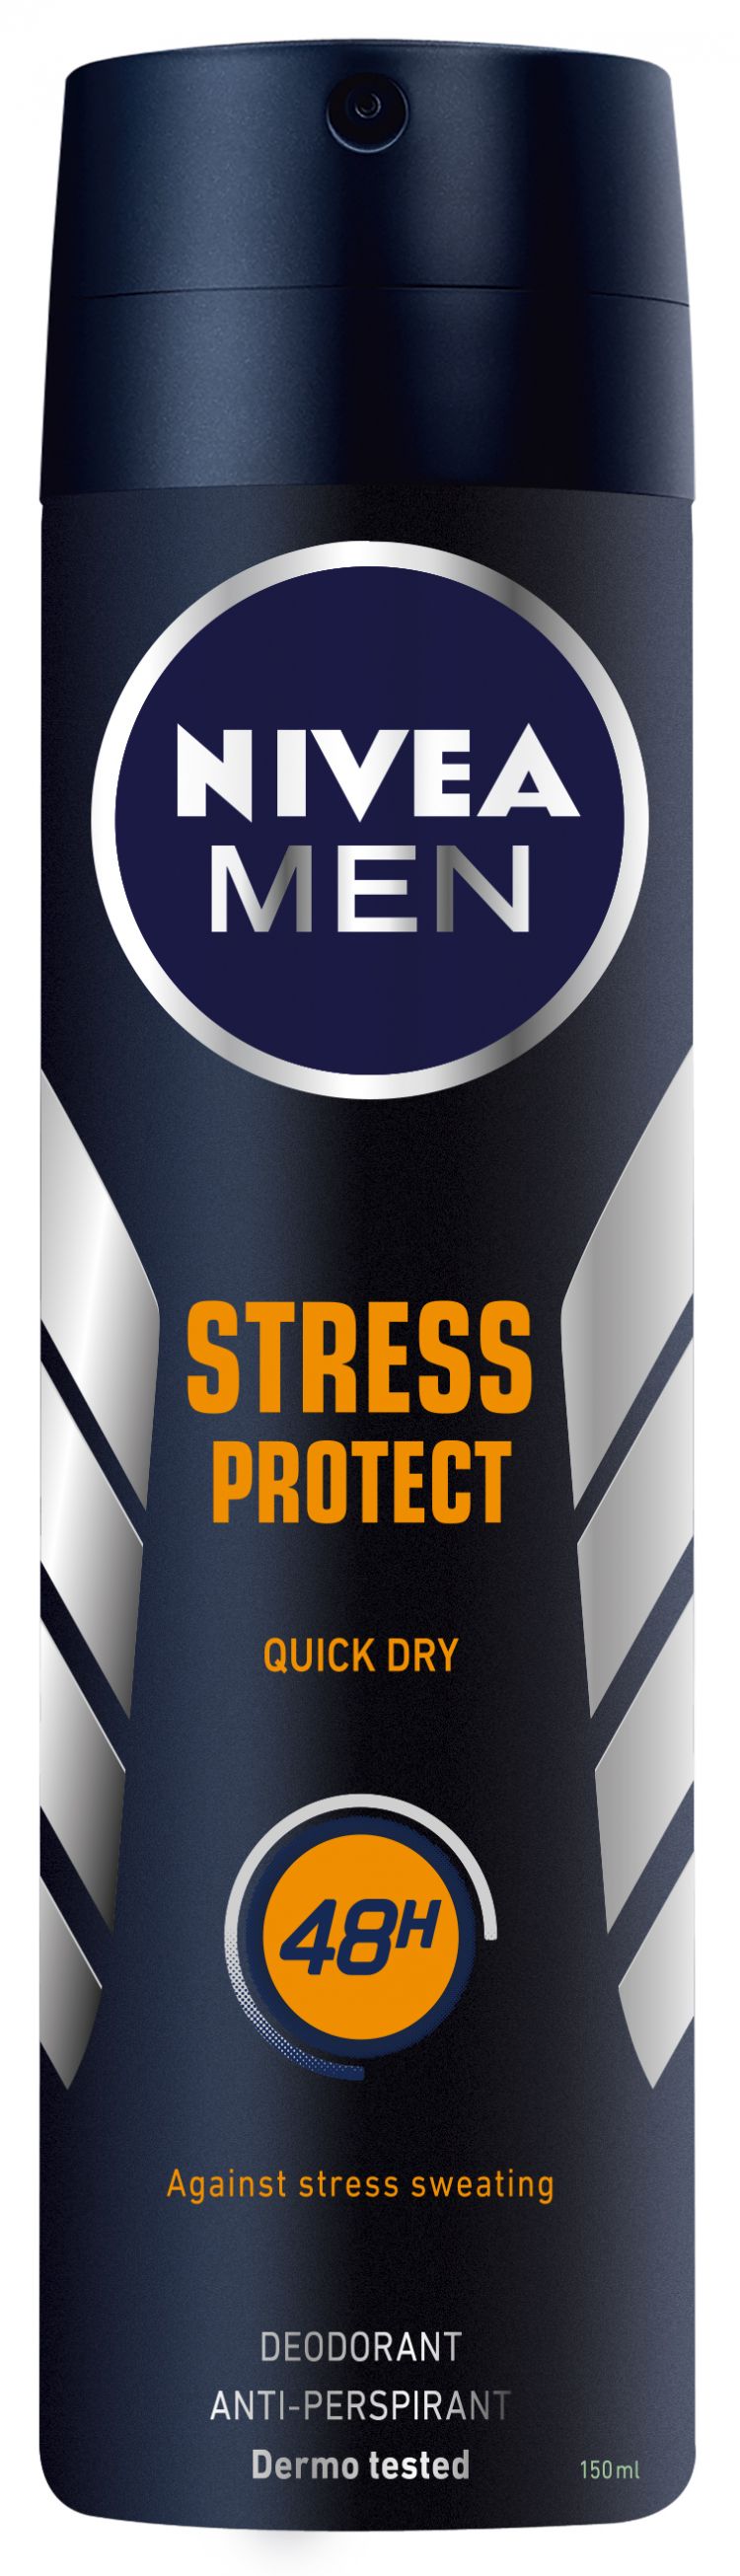 Nivea Men 48h Stress Protect Spray Anti Traspirante 150ml 8837